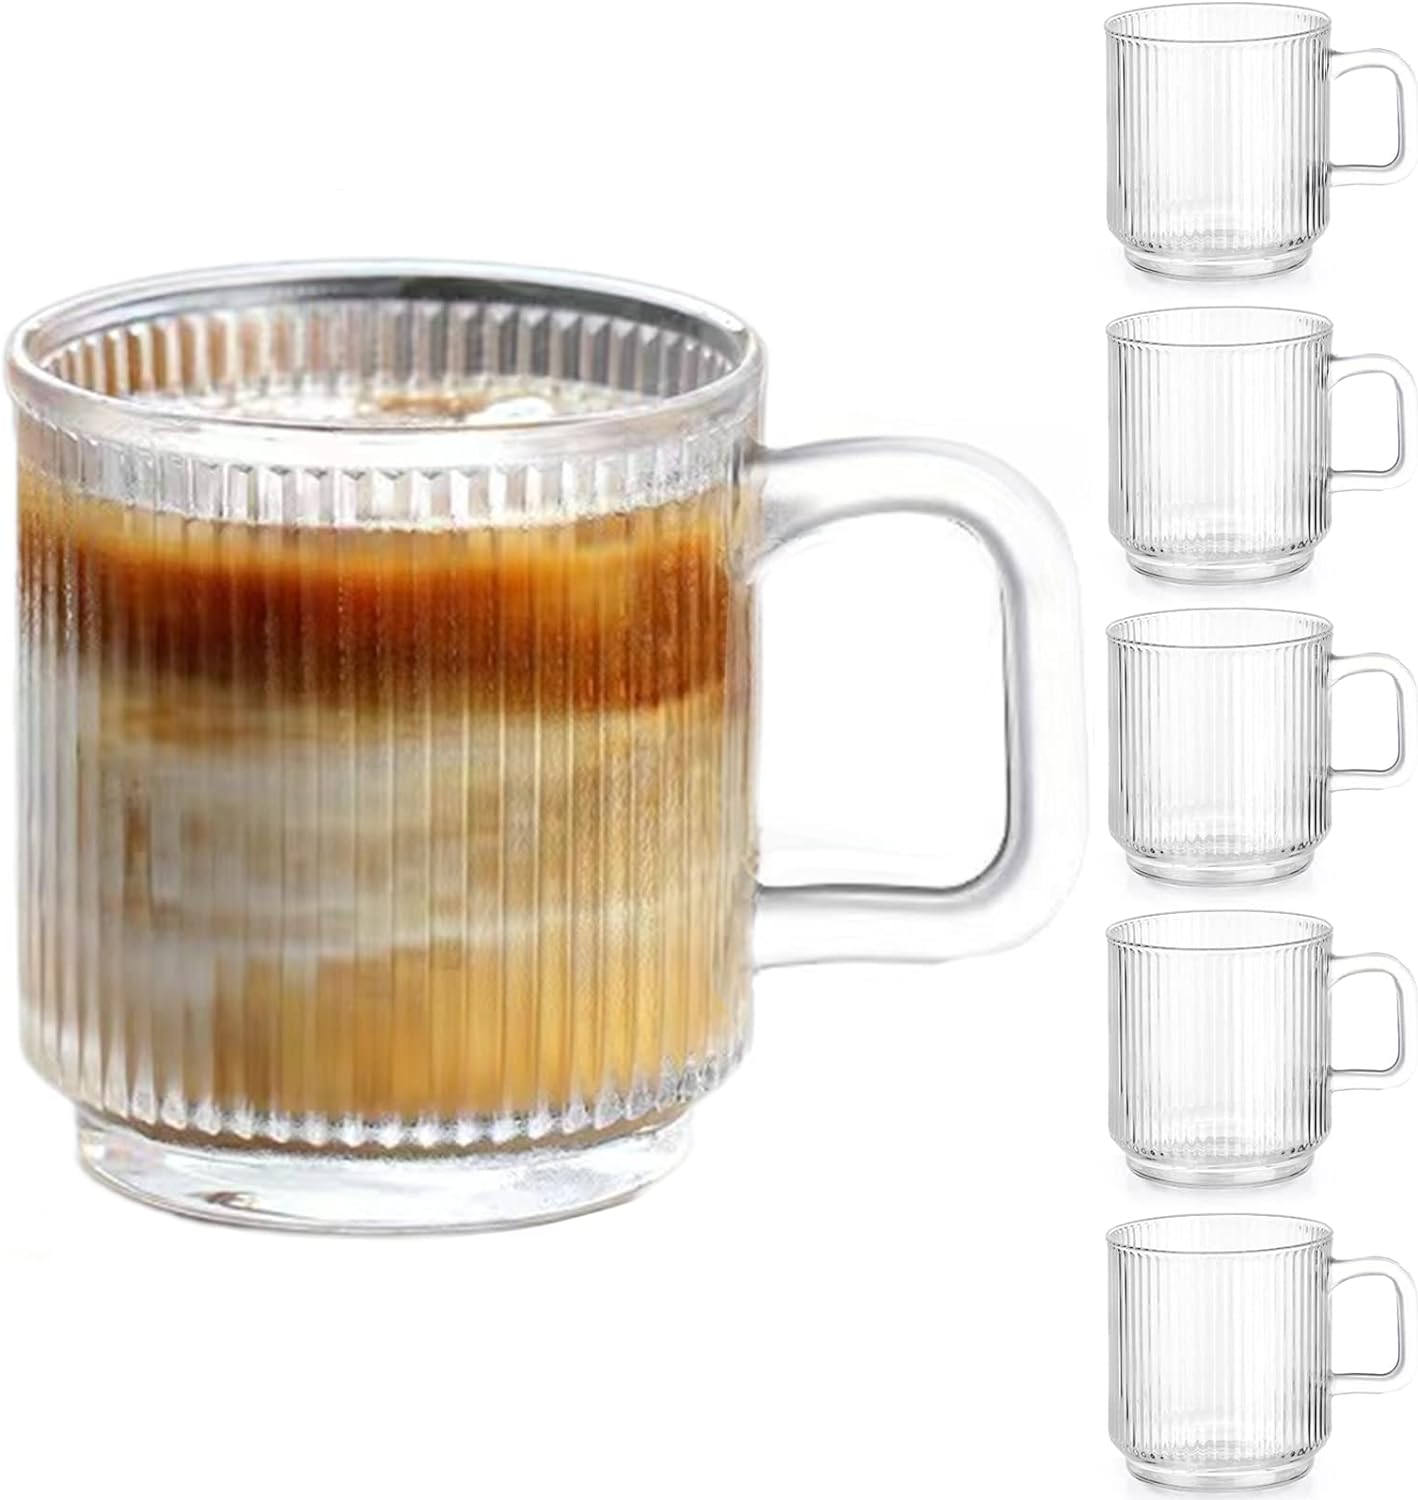 Liuruiyu Double Wall Glass Coffee mugs, (Set of 4) 12 Ounces-Clear Glass  Coffee Cups with Handle,Ins…See more Liuruiyu Double Wall Glass Coffee  mugs